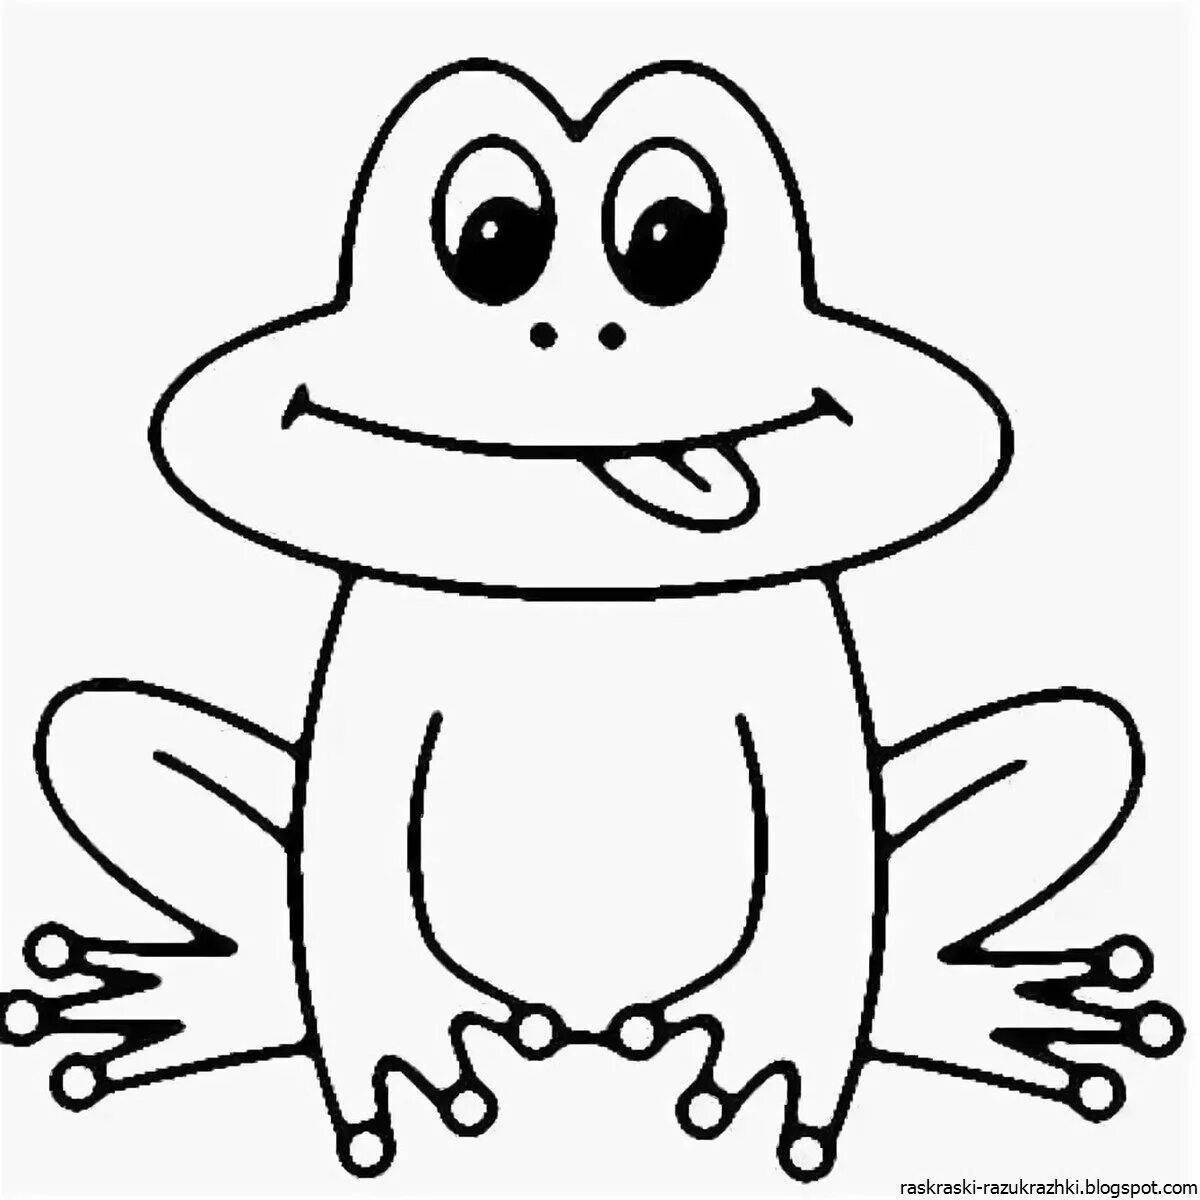 Cute frog coloring book for preschoolers